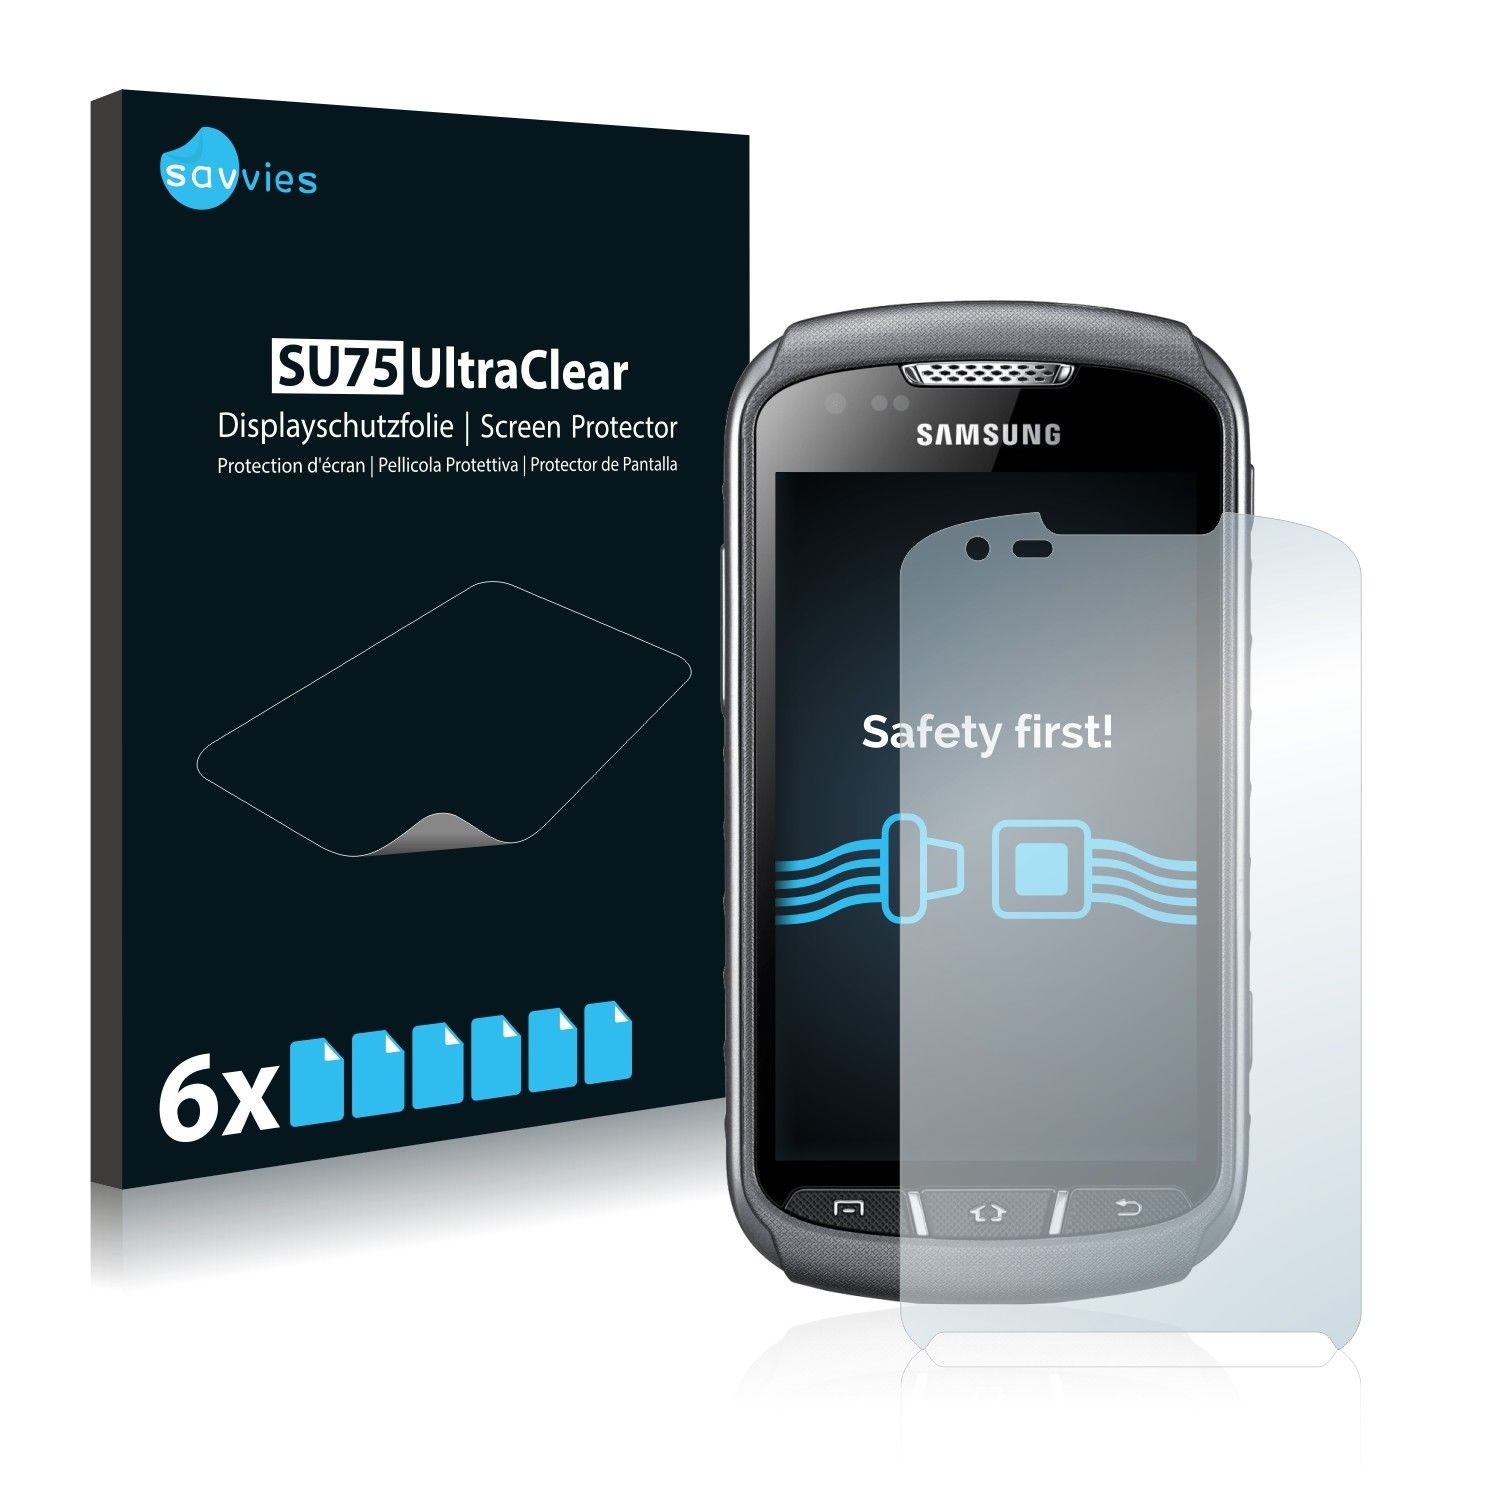 6x SU75 UltraClear Screen Protector Samsung Galaxy Xcover 2 S7710